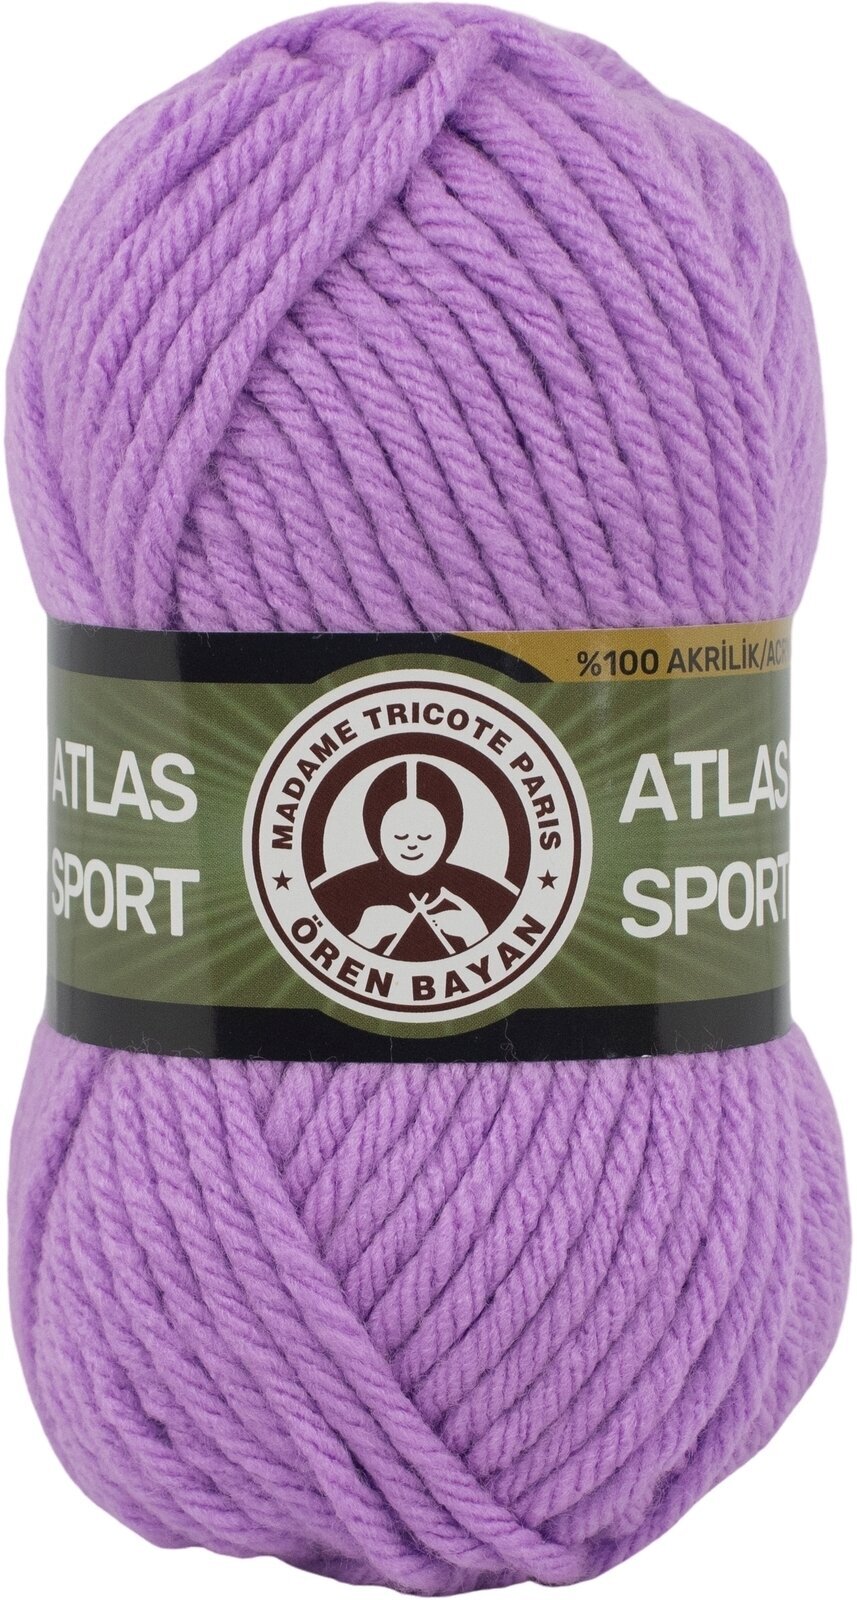 Knitting Yarn Madame Tricote Paris Atlas Sport 3024 056 Knitting Yarn